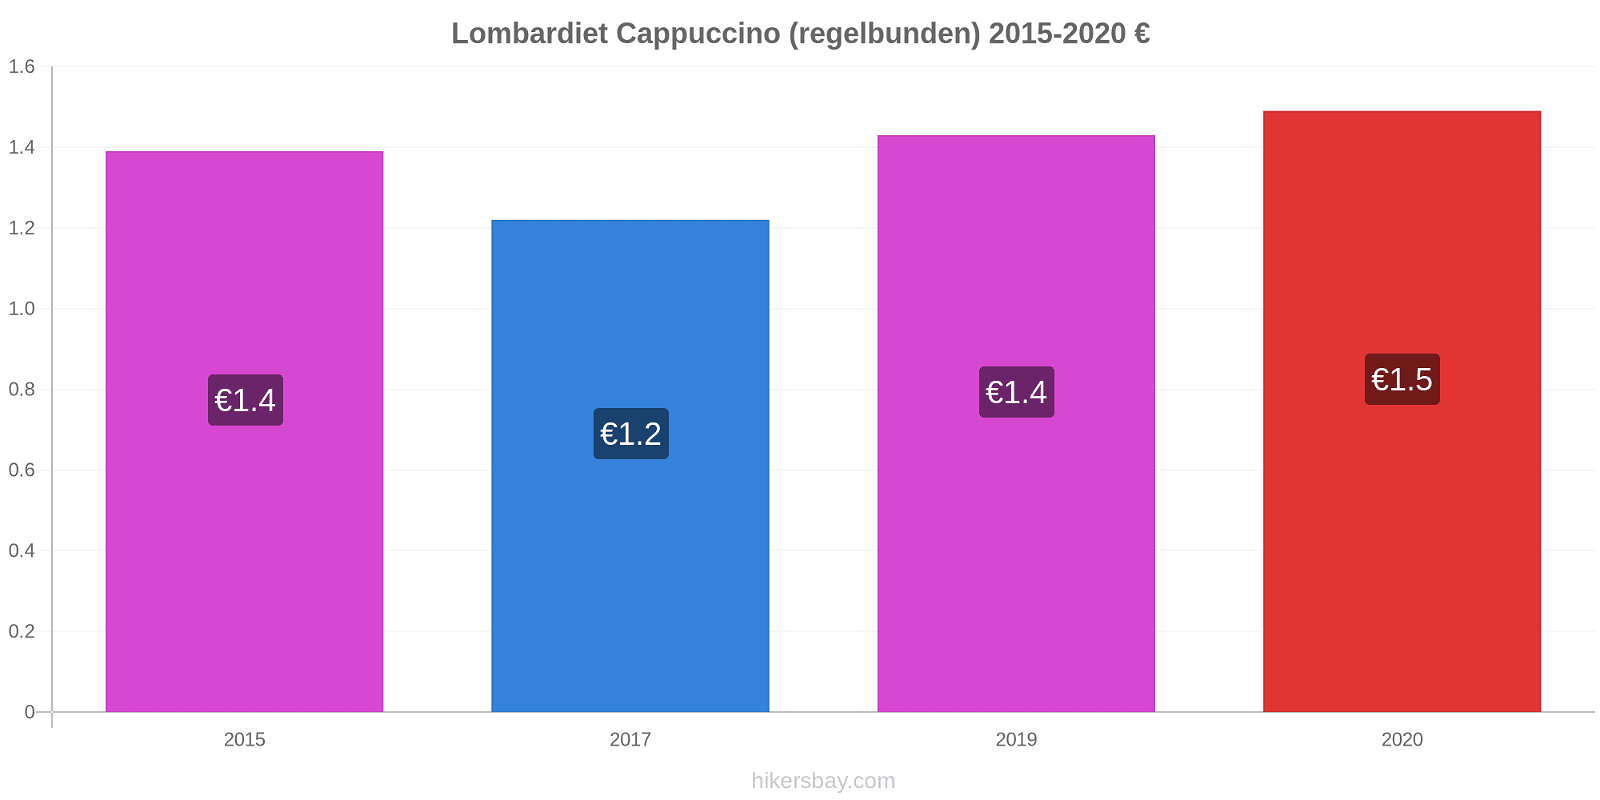 Lombardiet prisförändringar Cappuccino (regelbunden) hikersbay.com